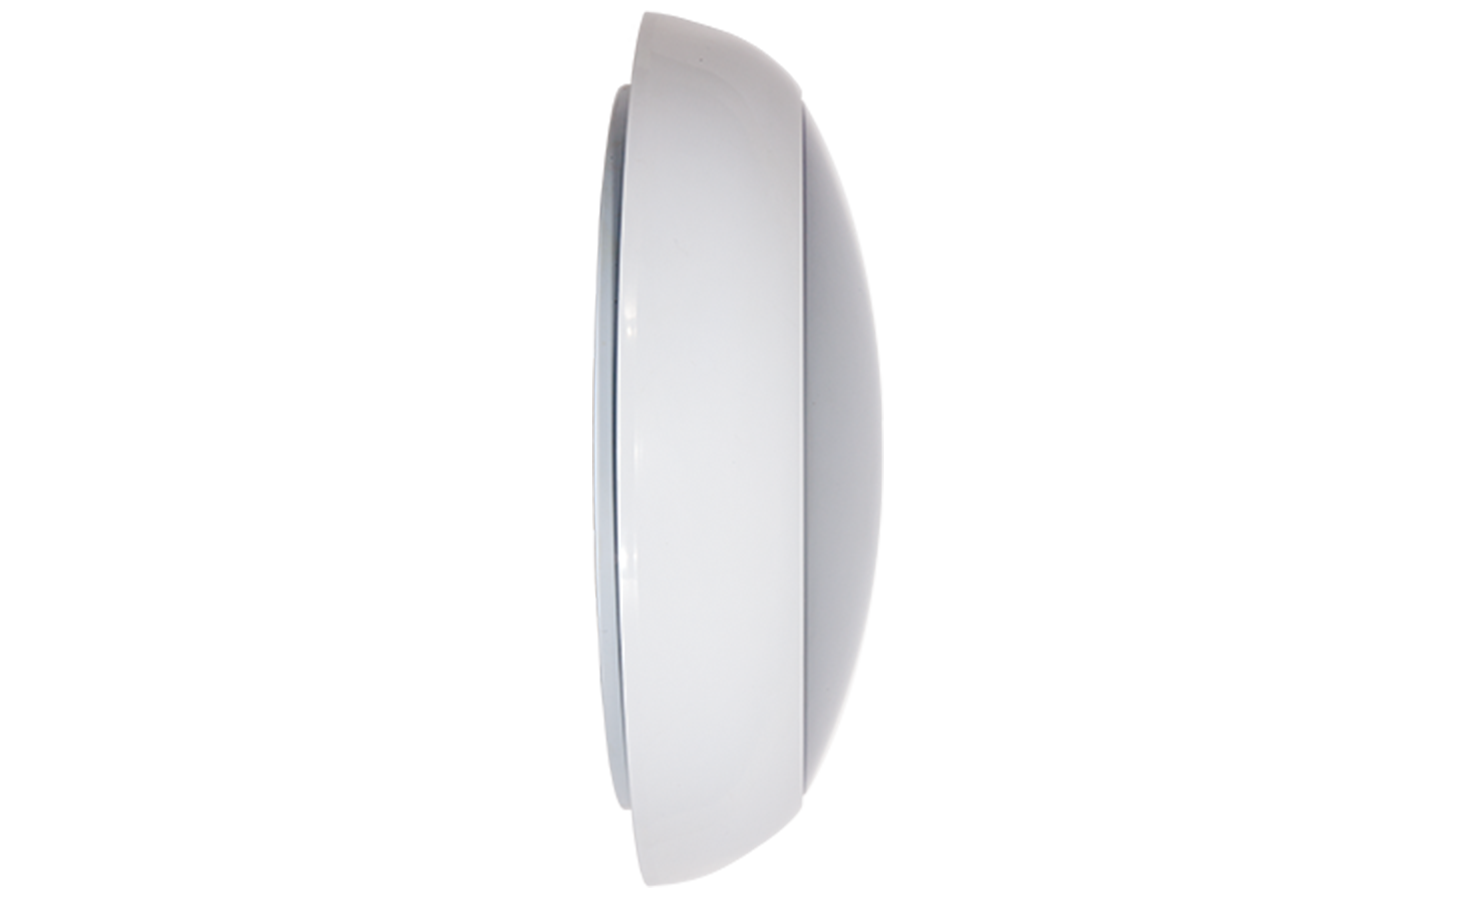 Ultra modern curved profile